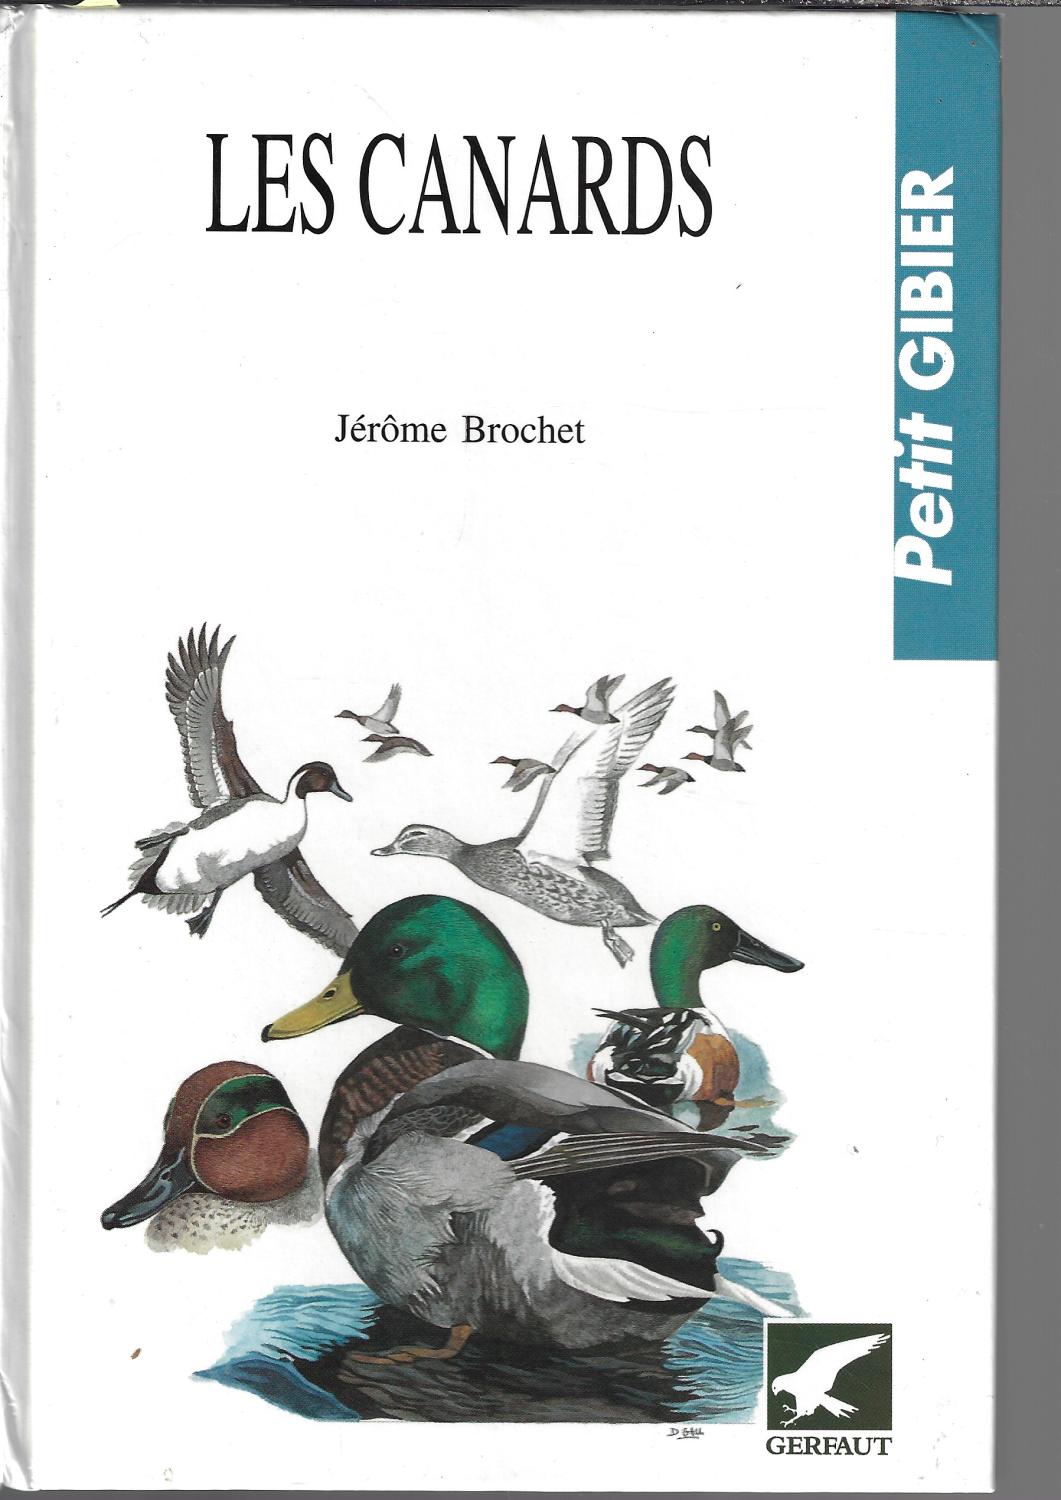 Les canards - Jérôme Brochet